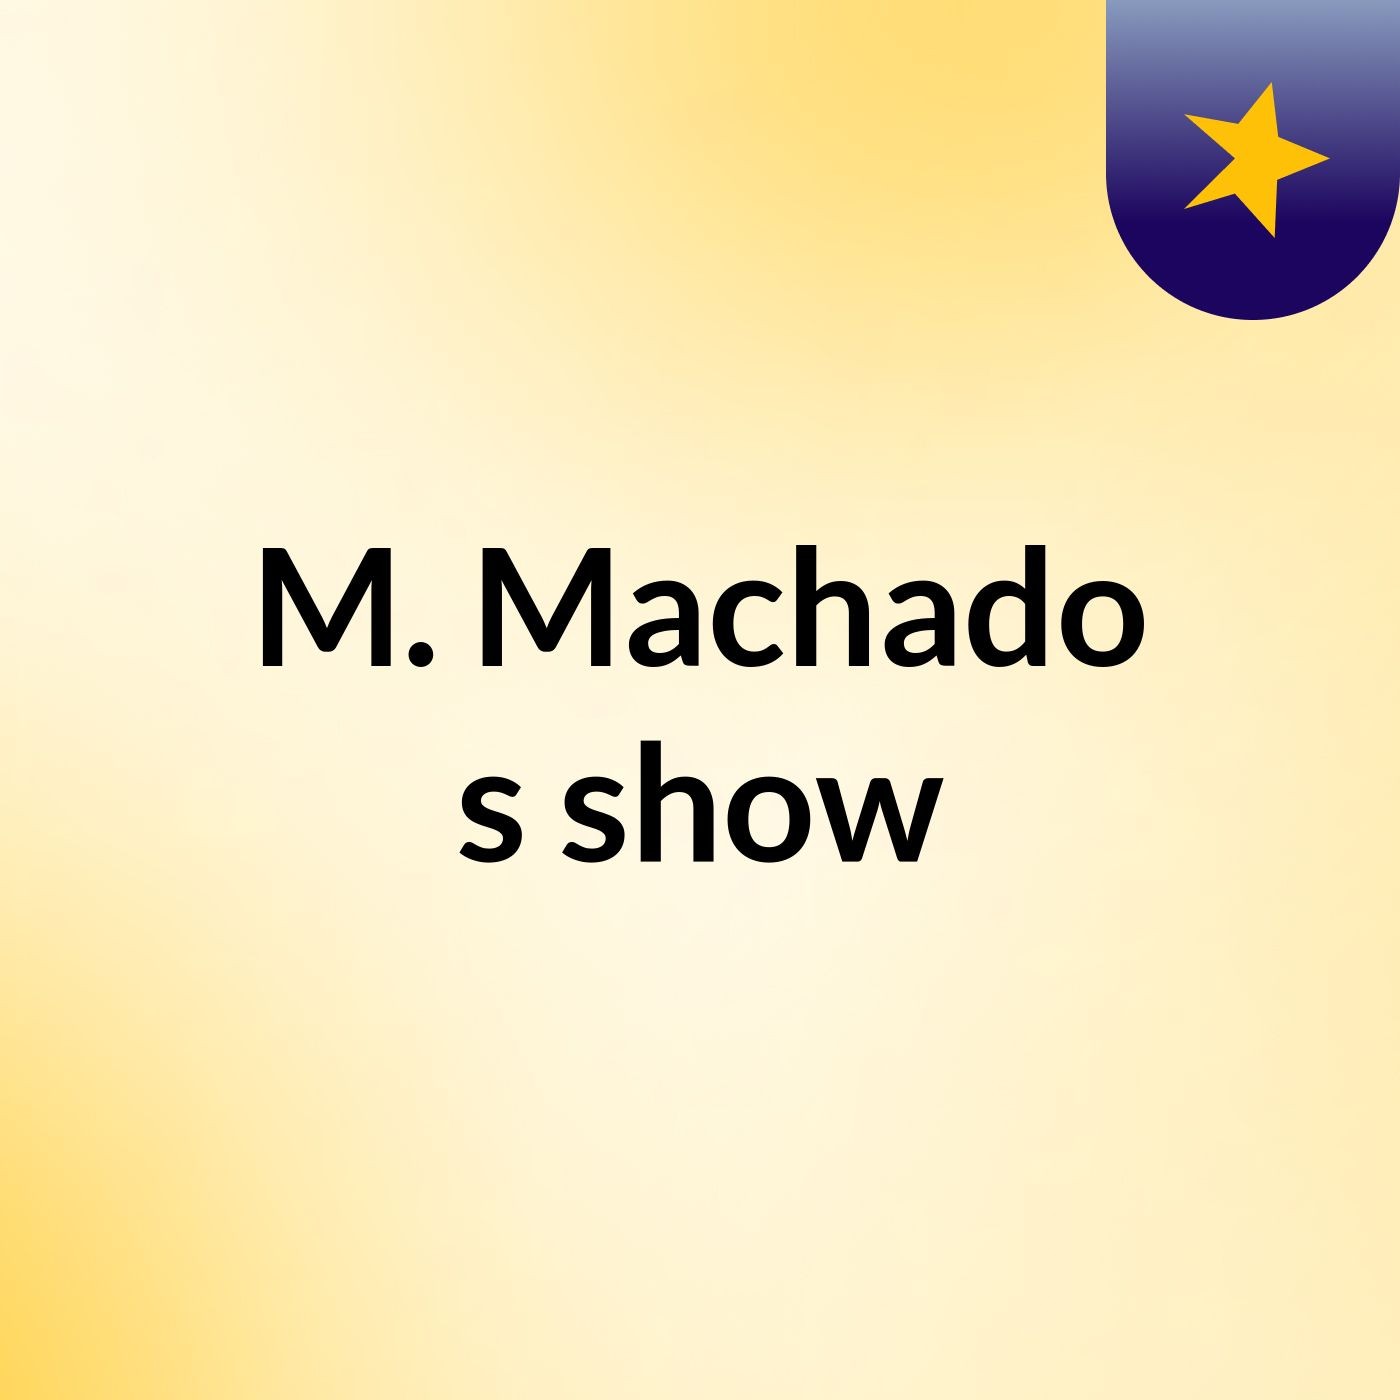 M. Machado's show